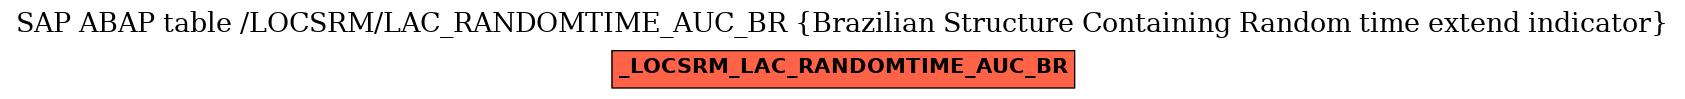 E-R Diagram for table /LOCSRM/LAC_RANDOMTIME_AUC_BR (Brazilian Structure Containing Random time extend indicator)